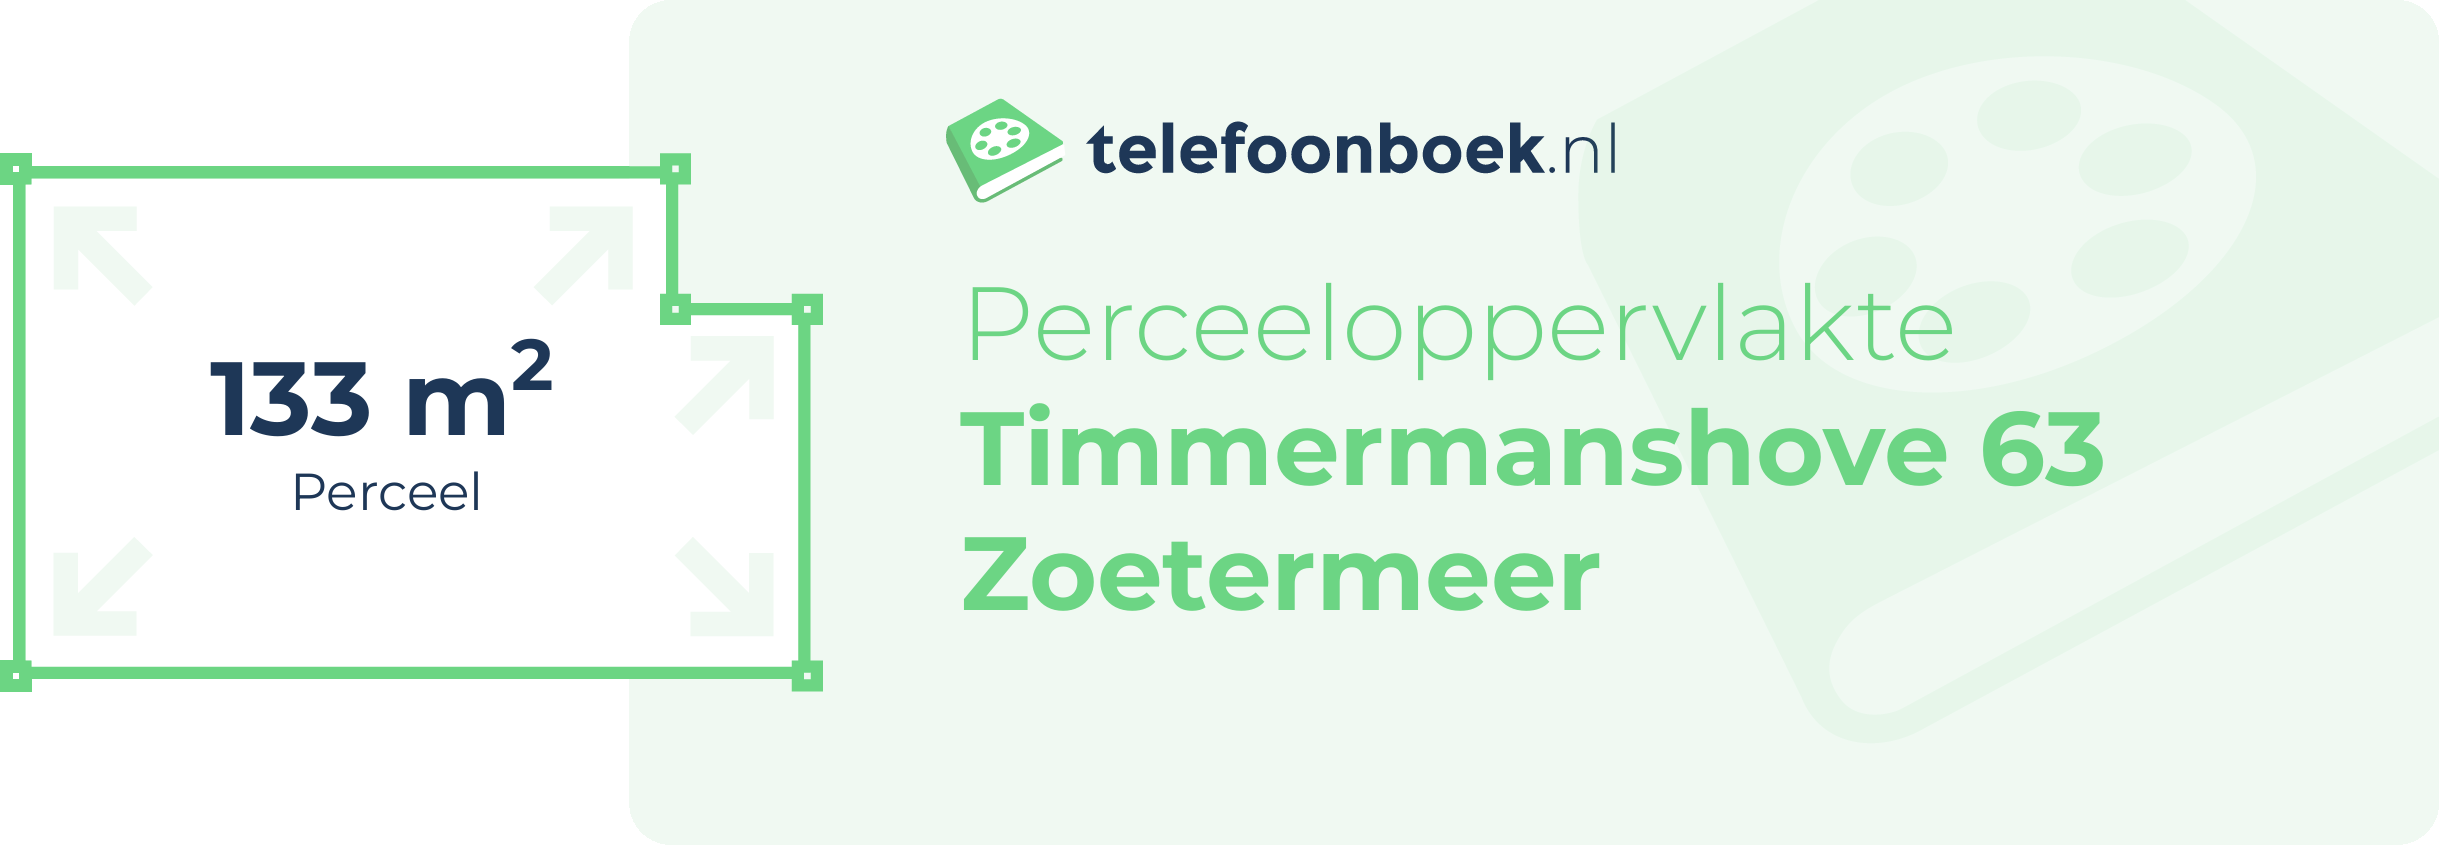 Perceeloppervlakte Timmermanshove 63 Zoetermeer